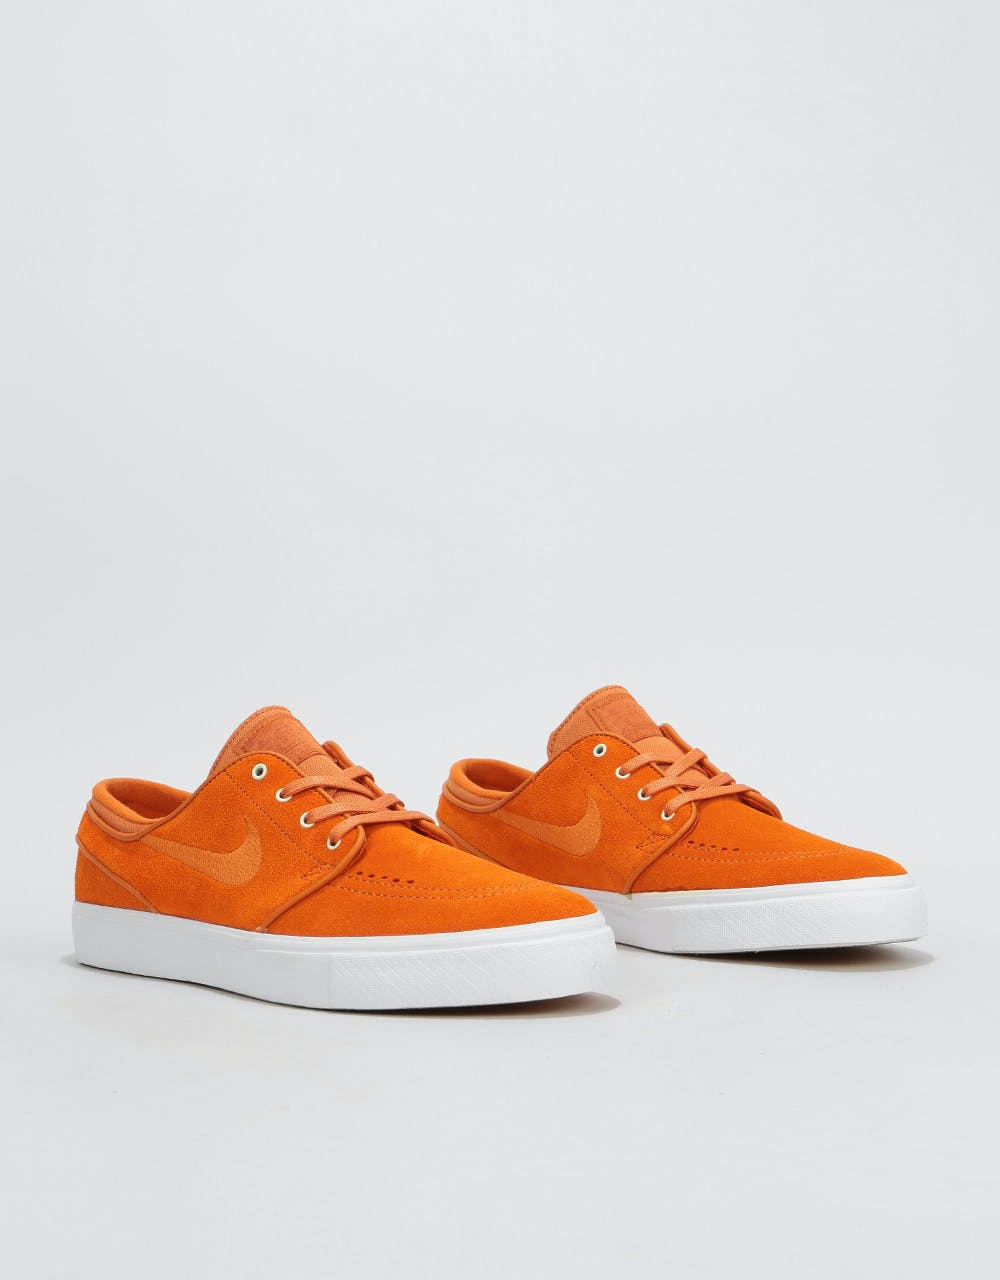 Nike SB Zoom Stefan Janoski Skate Shoes - Cinder Orange/White